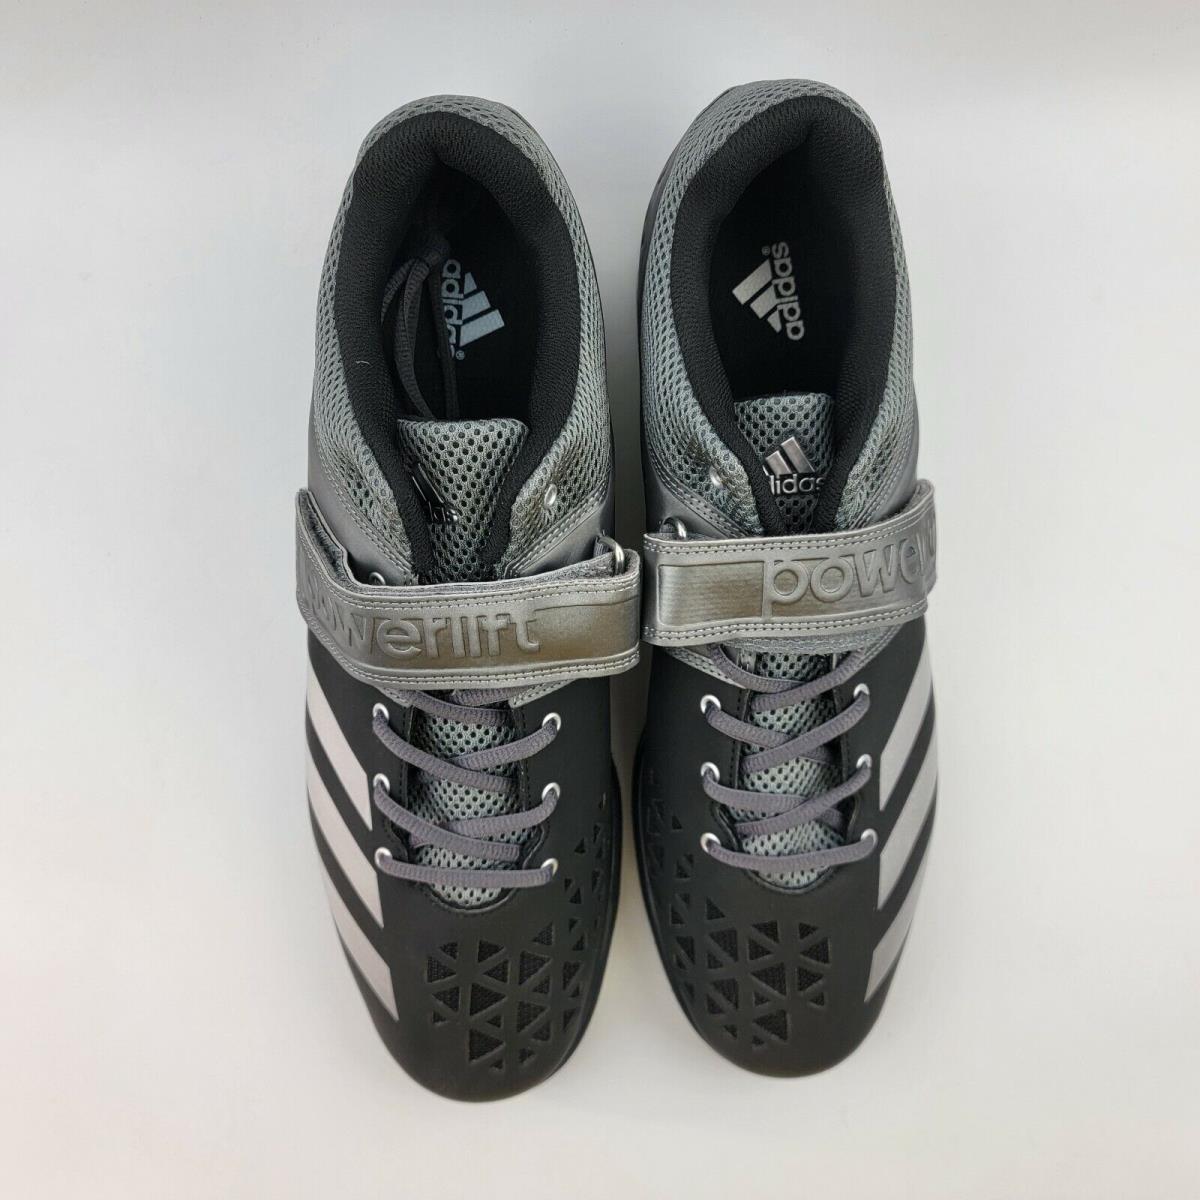 Adidas shoes Powerlift - Black 2